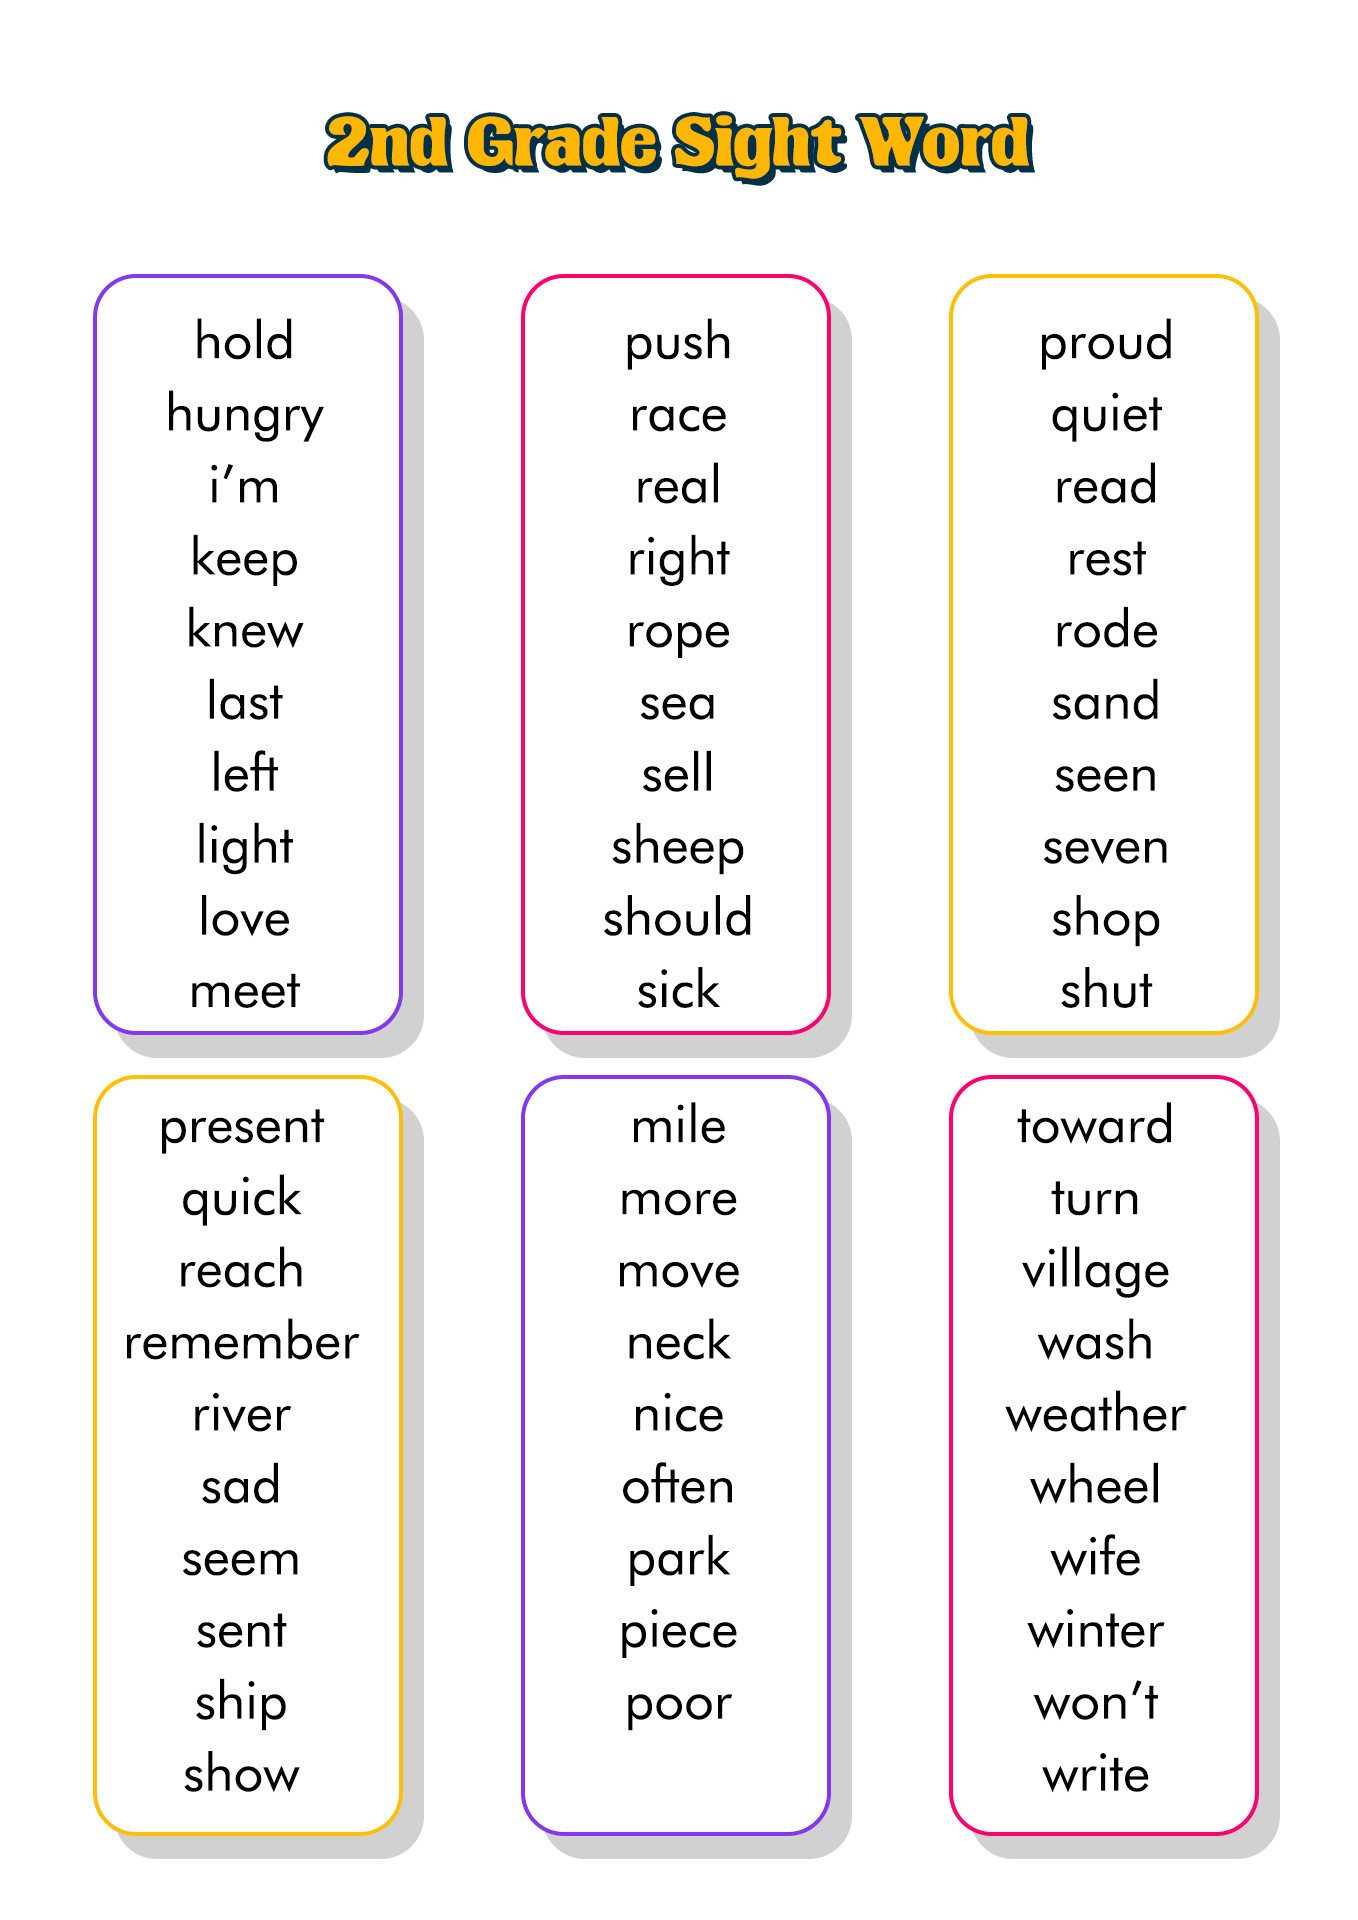 2nd Grade Sight Word List Printable Image